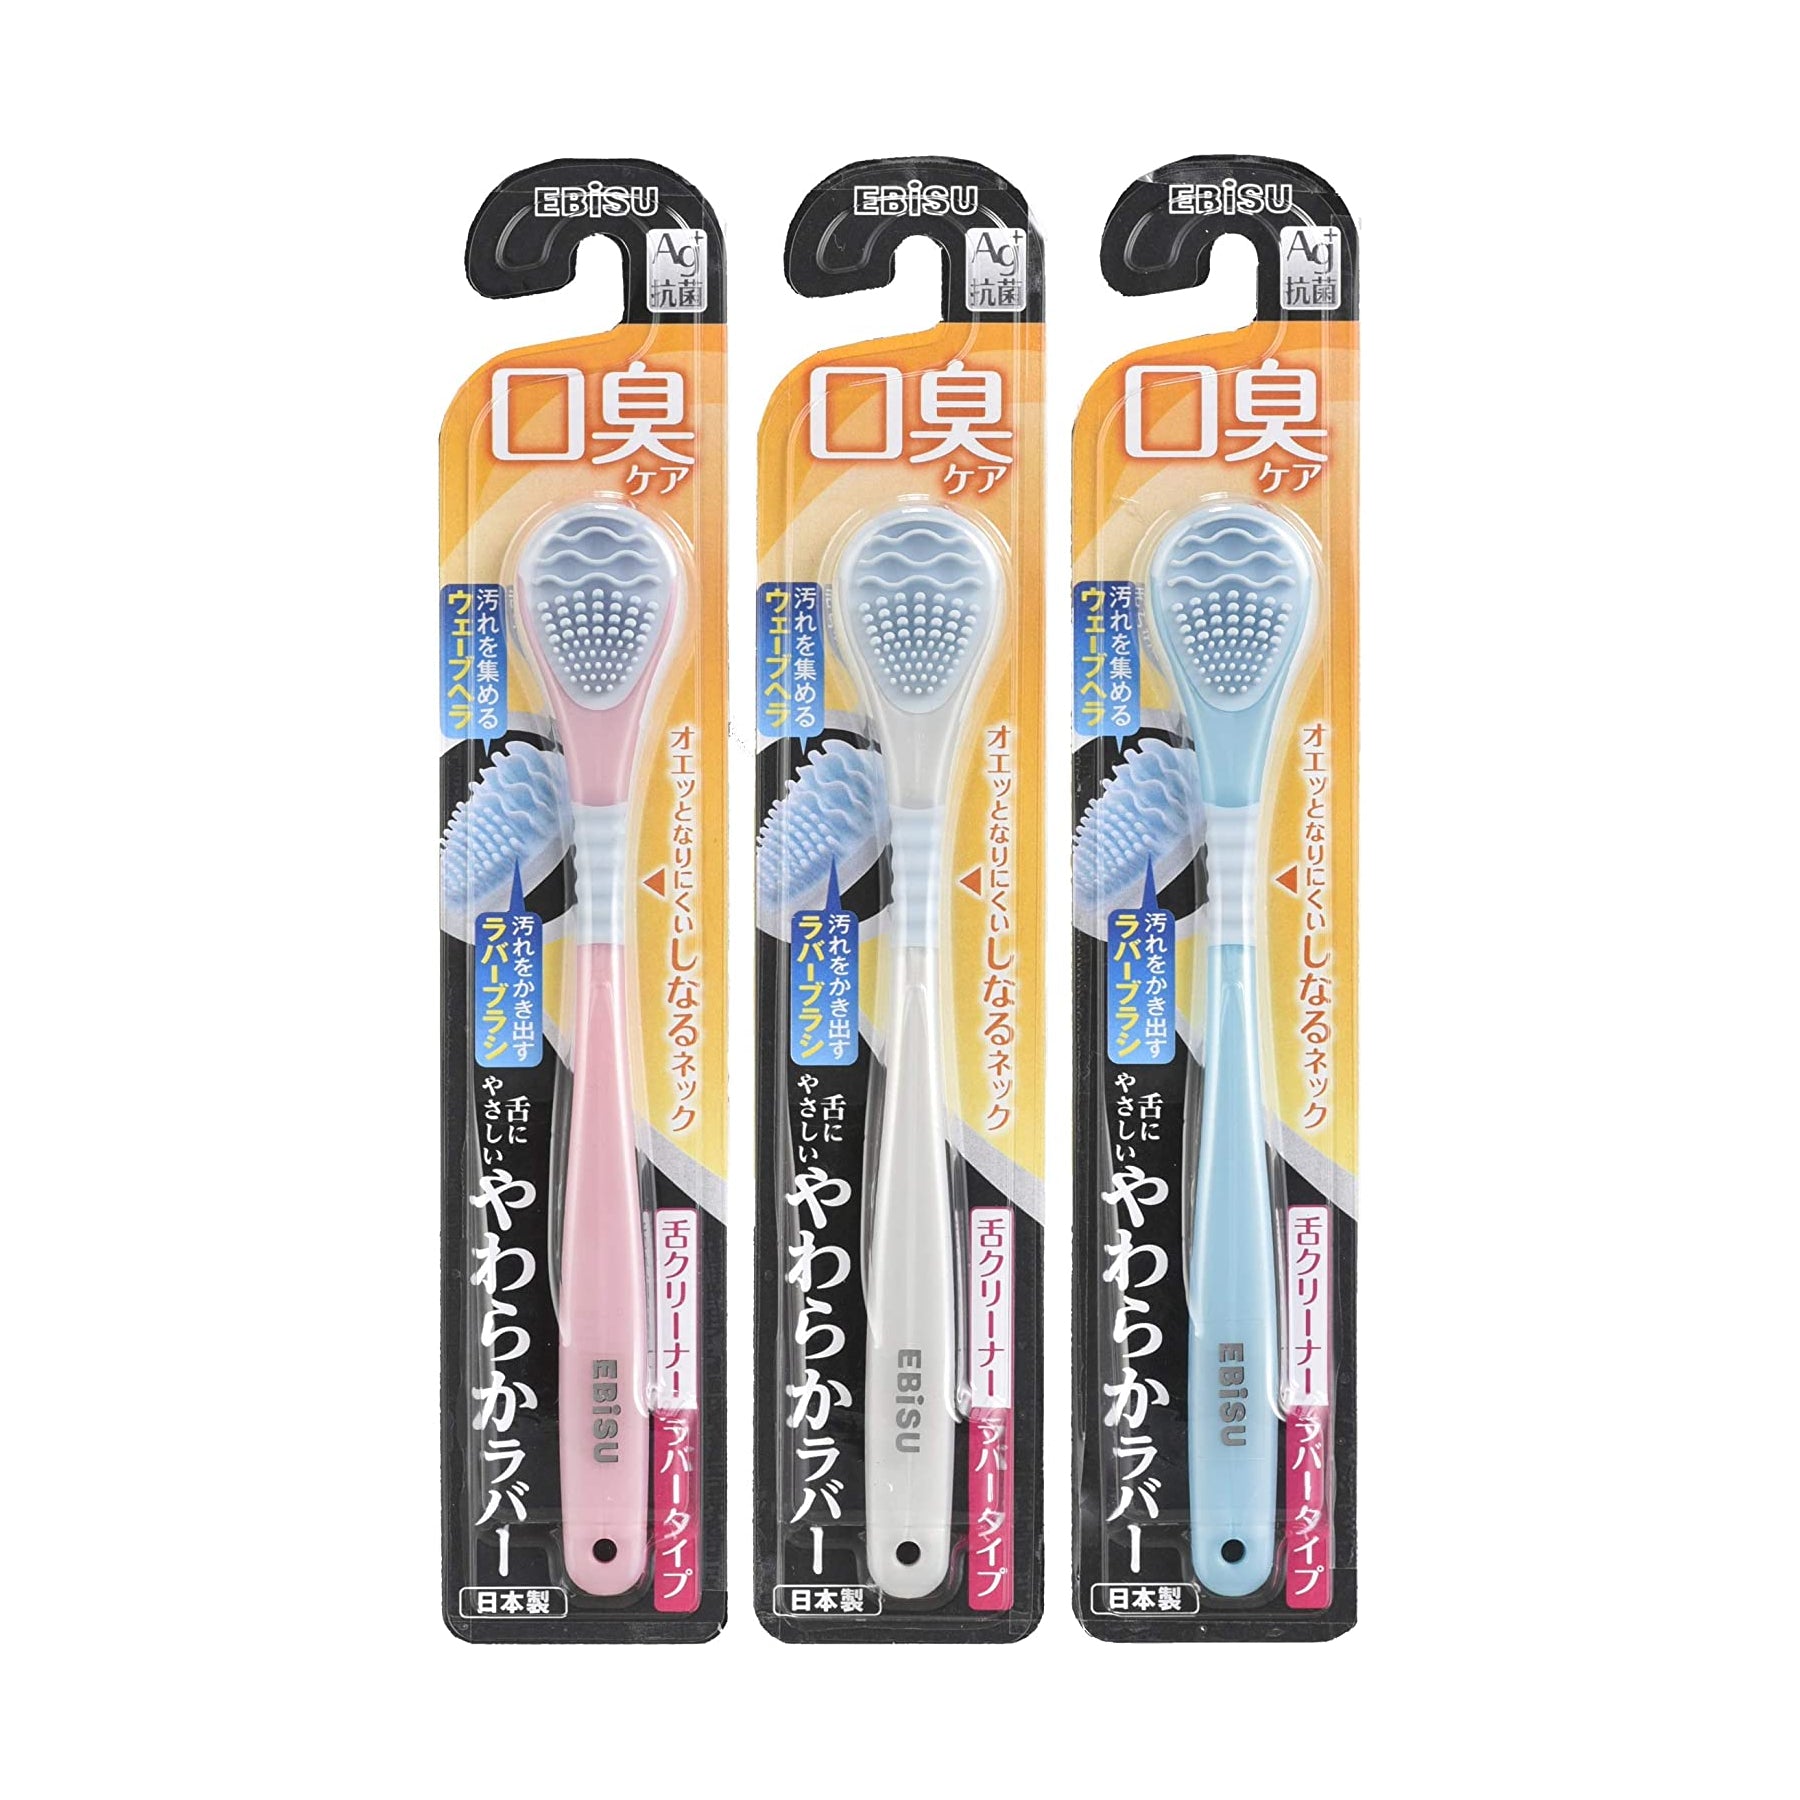 Ebisu Soft Rubber Tongue Cleaner Tongue Scrapers Ebisu Assorted - 1 Toothbrush  